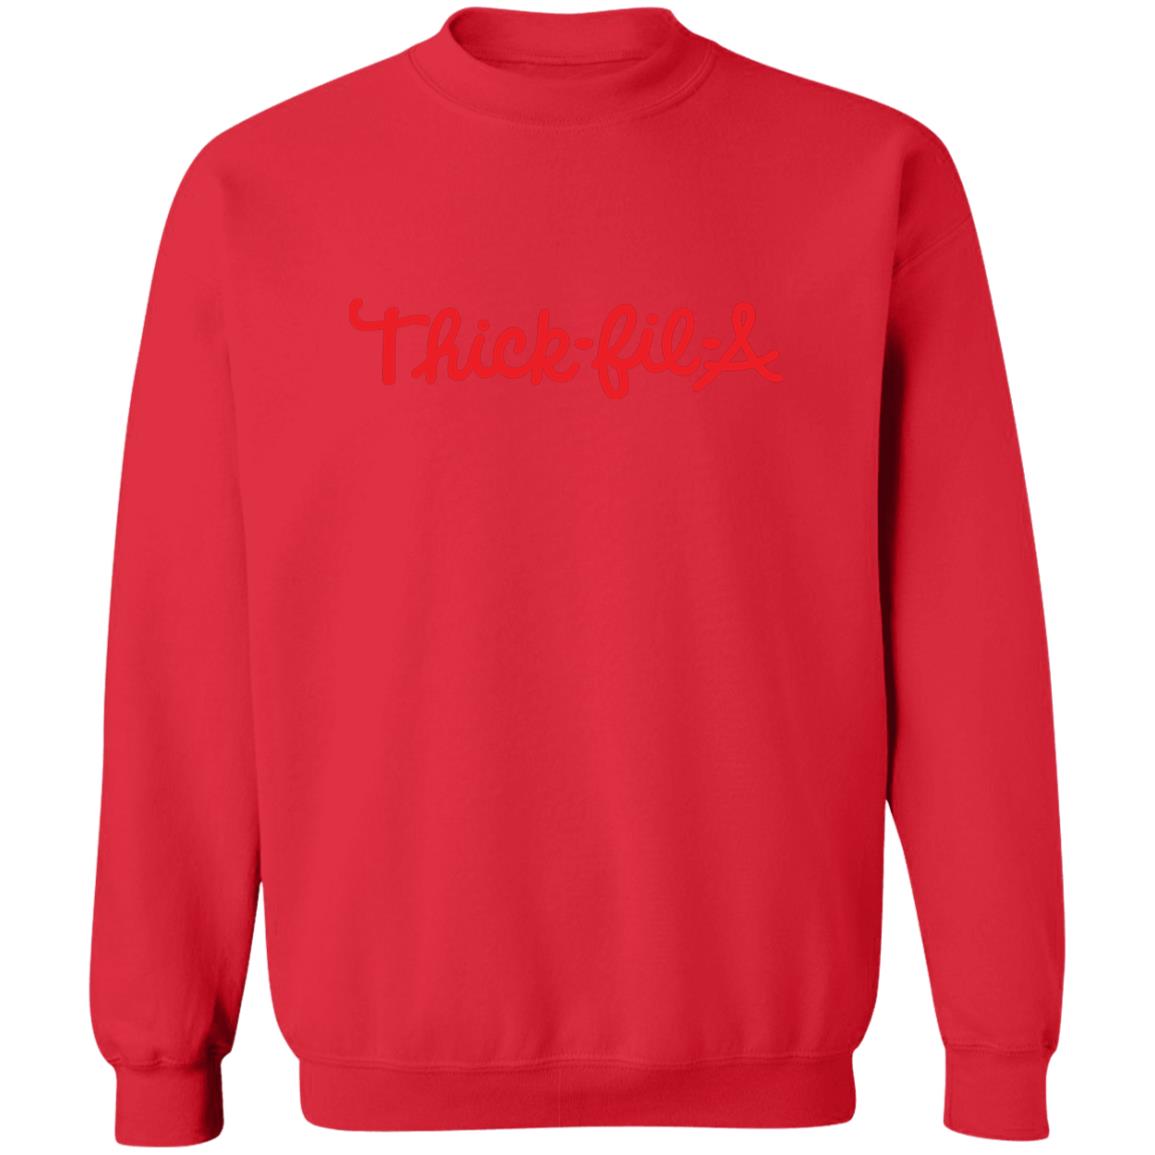 Thick Fil-a Nb -  Sweatshirt